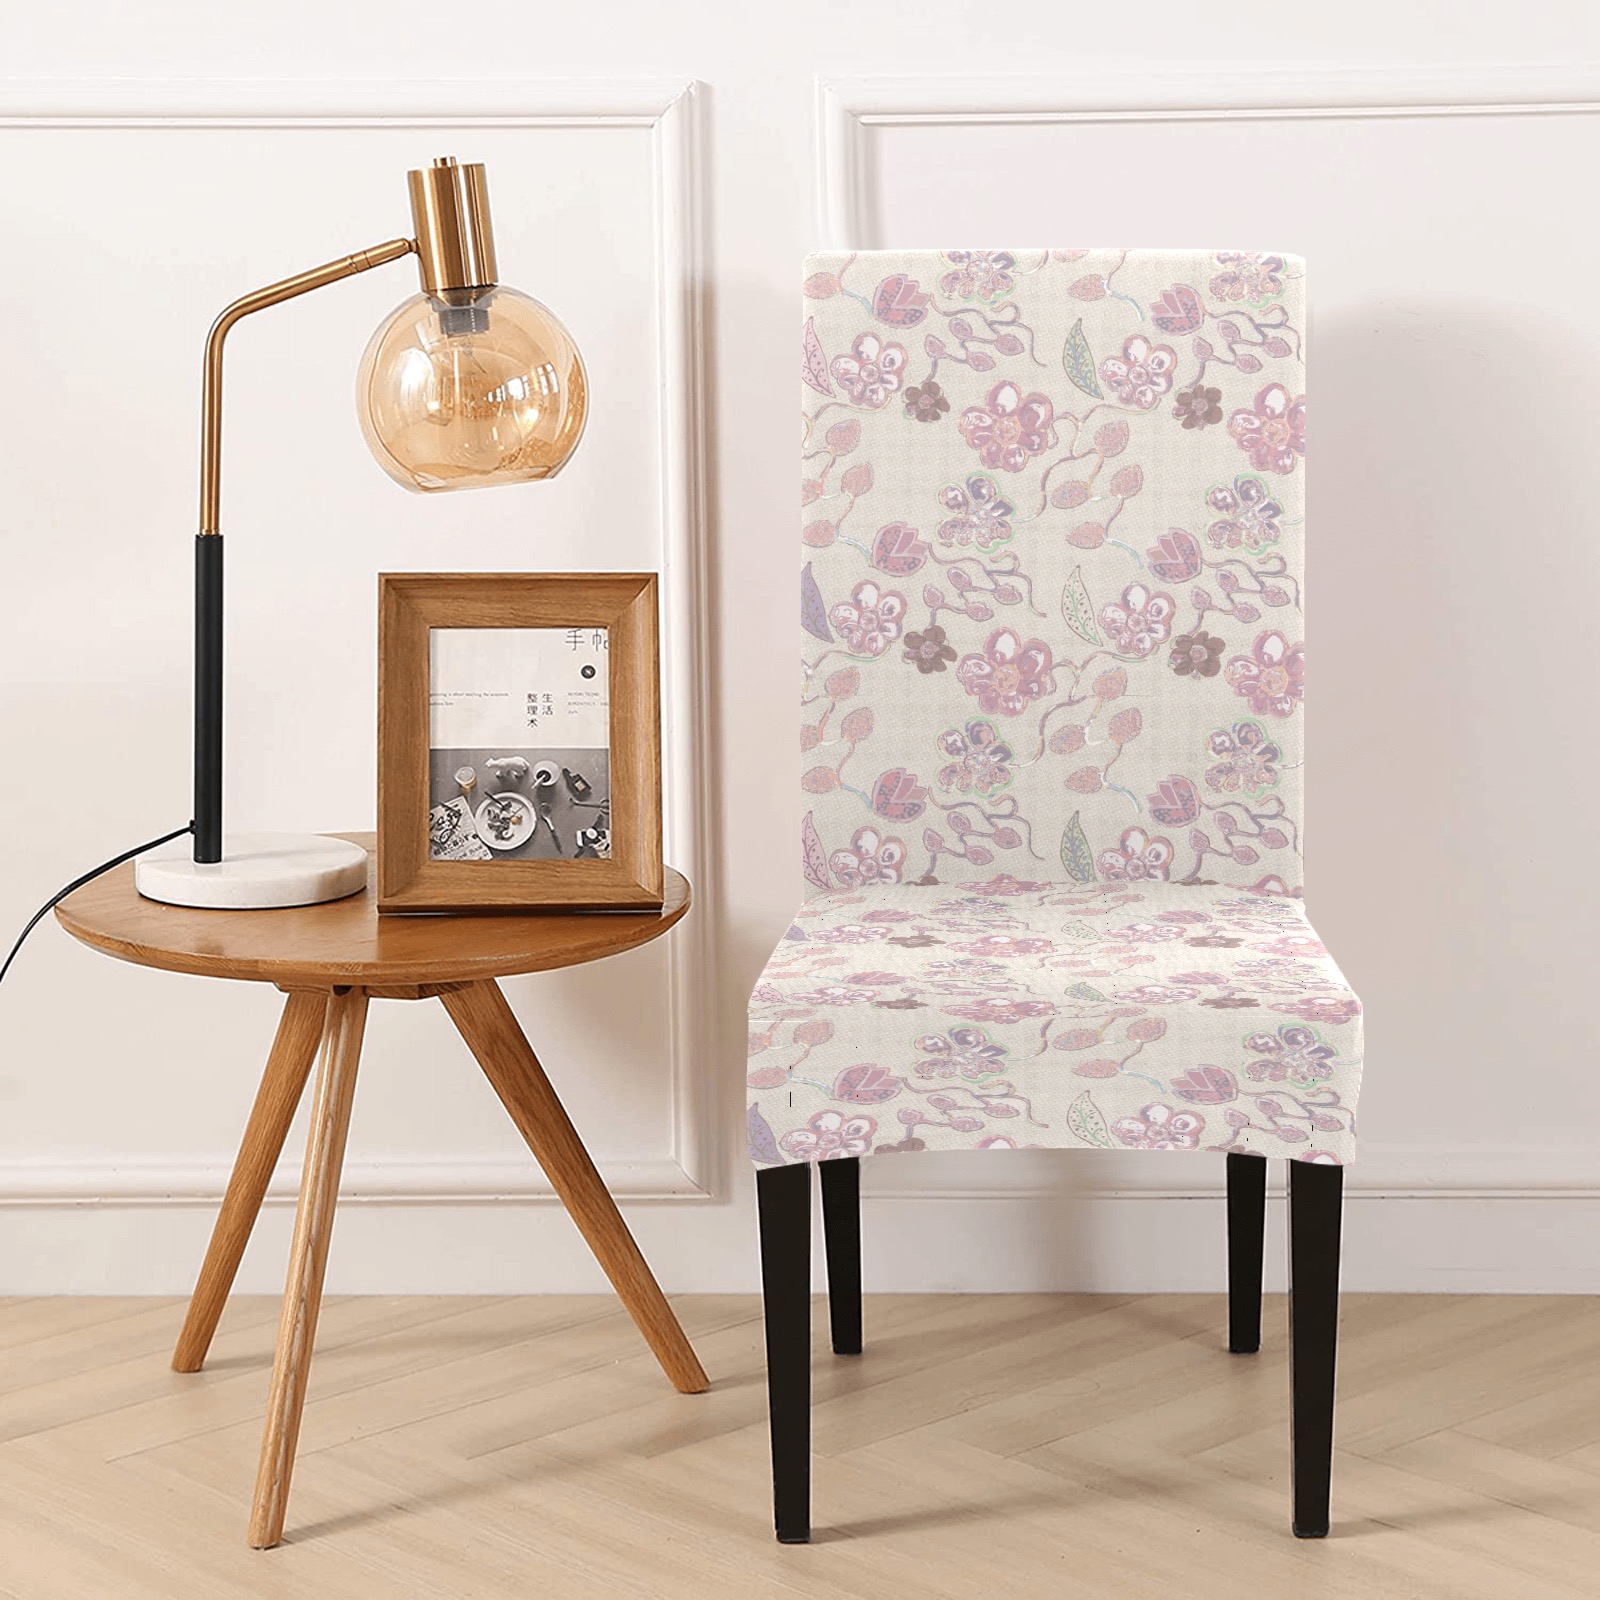 Unique Soft Beige Floral Vintage Removable Dining Chair Cover